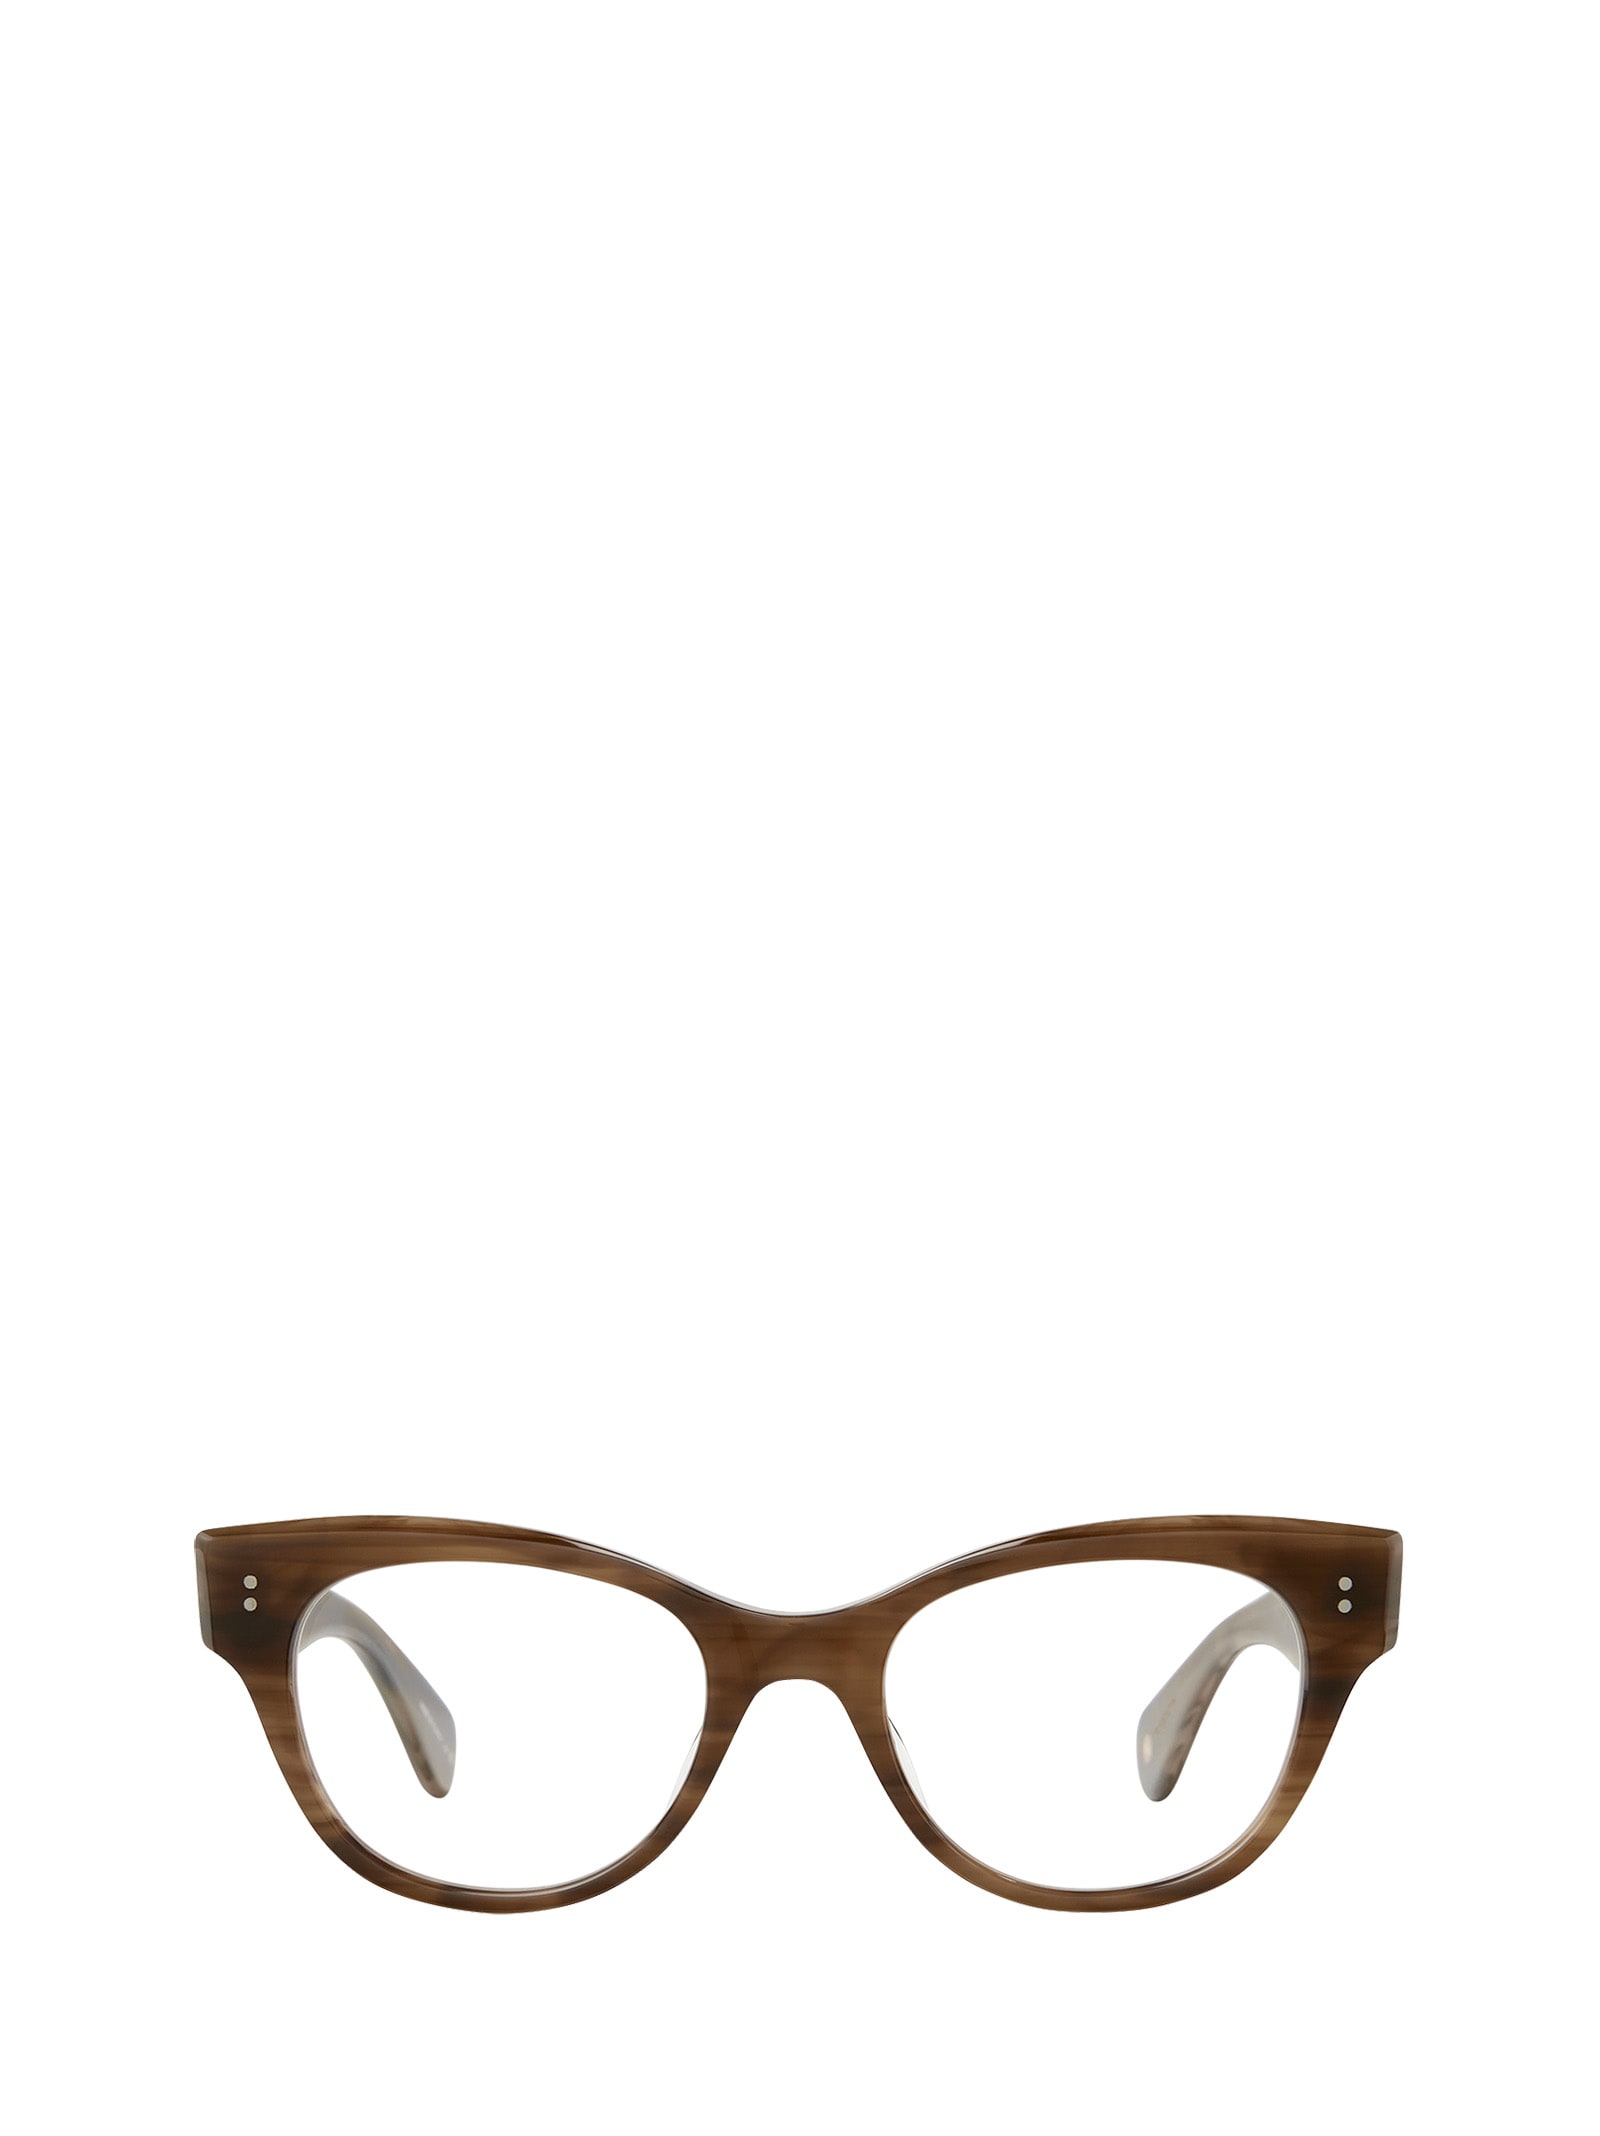 Octavia Malibu Tortoise Glasses